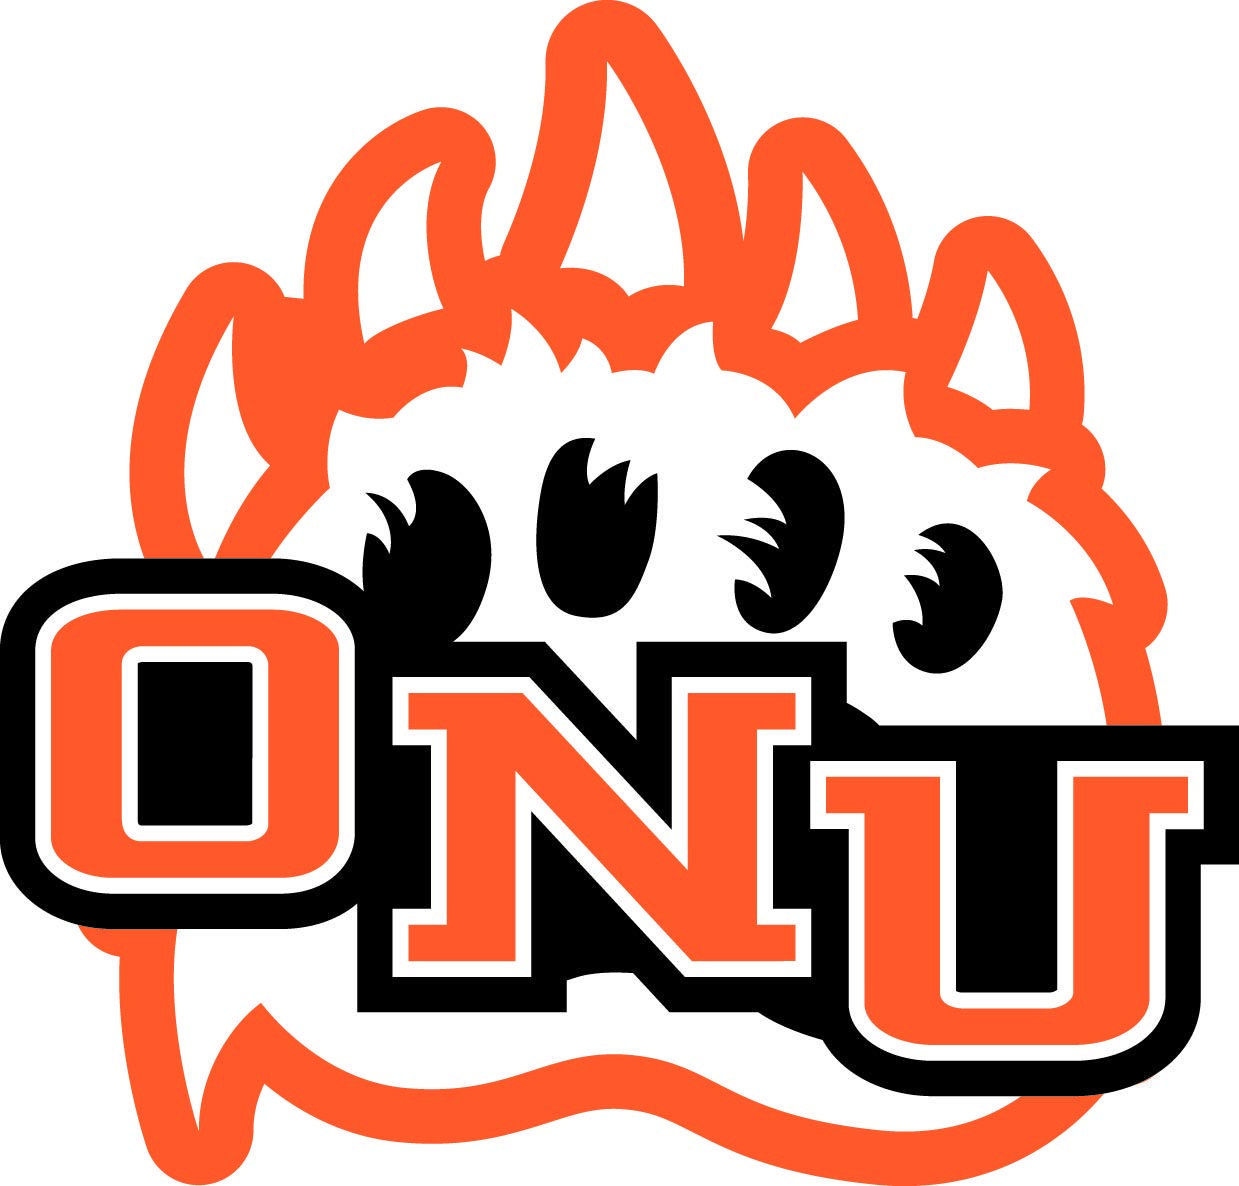 ONU Logo - Official ONU Logos. Ohio Northern University